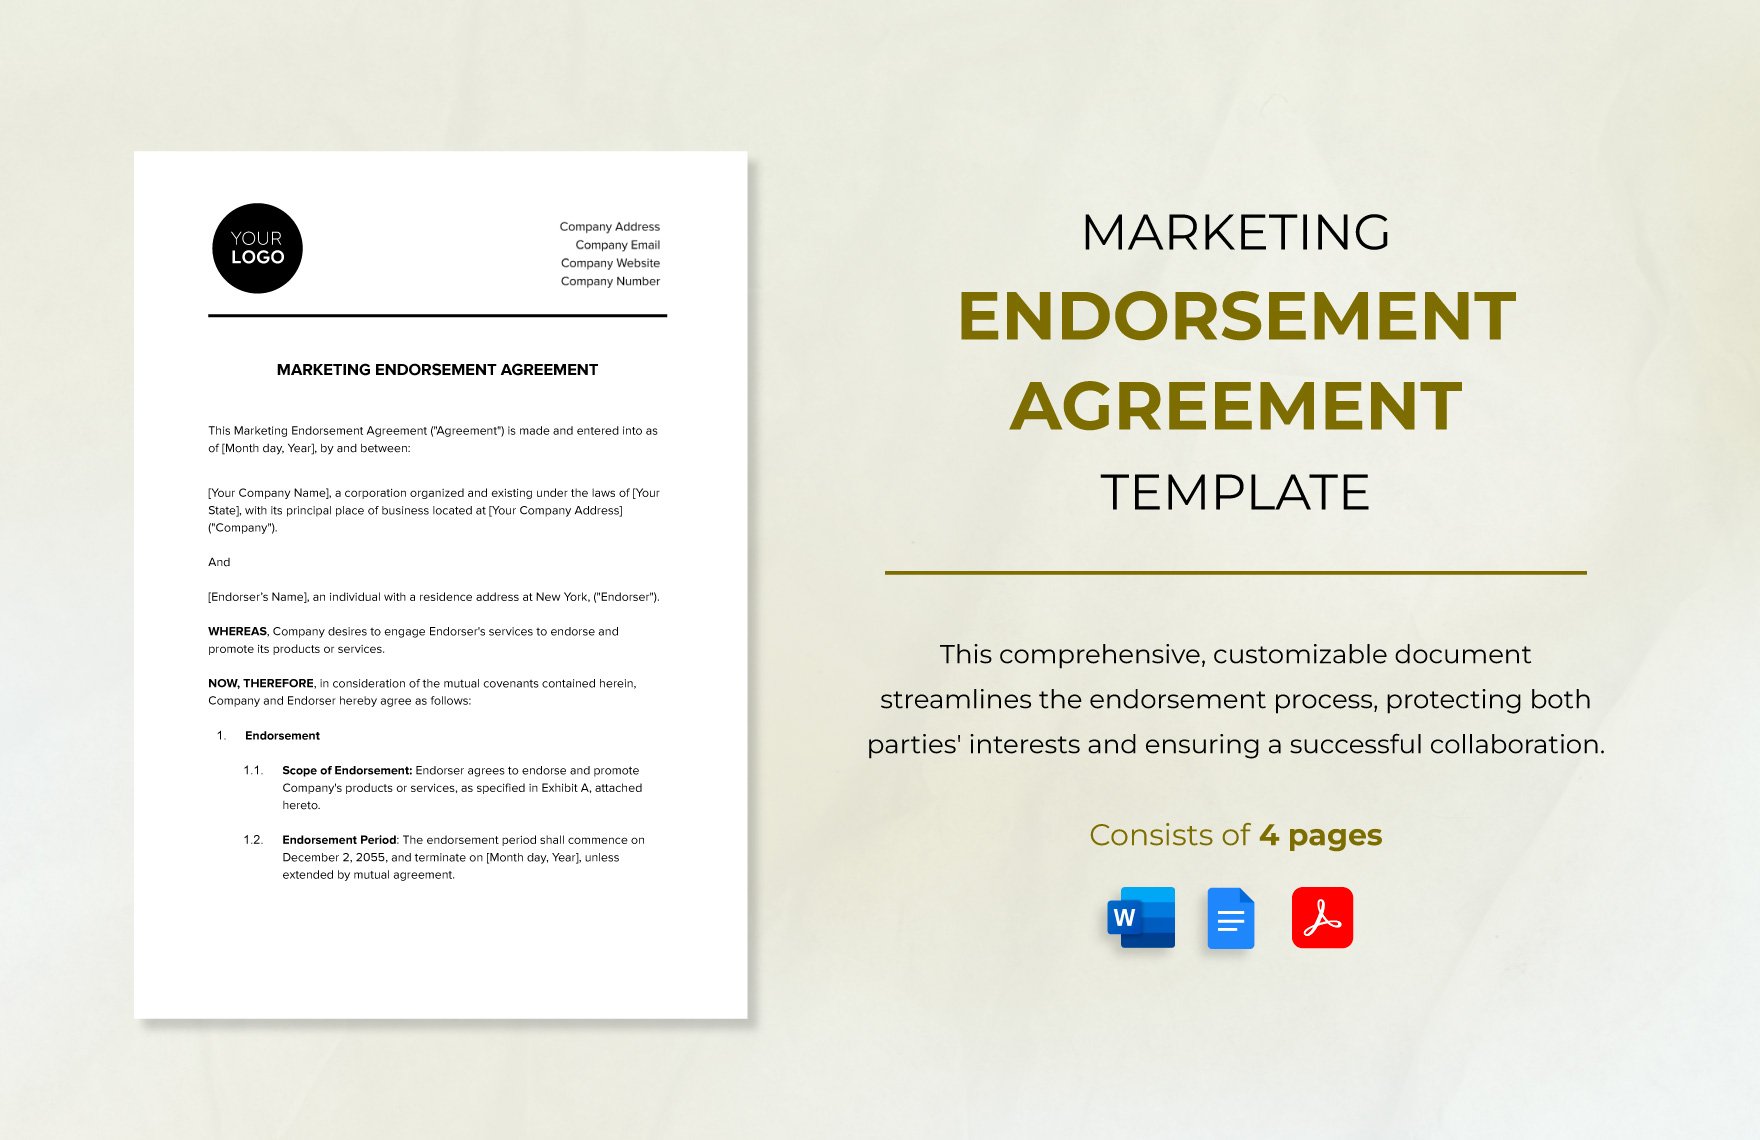 Marketing Endorsement Agreement Template in Word, Google Docs, PDF